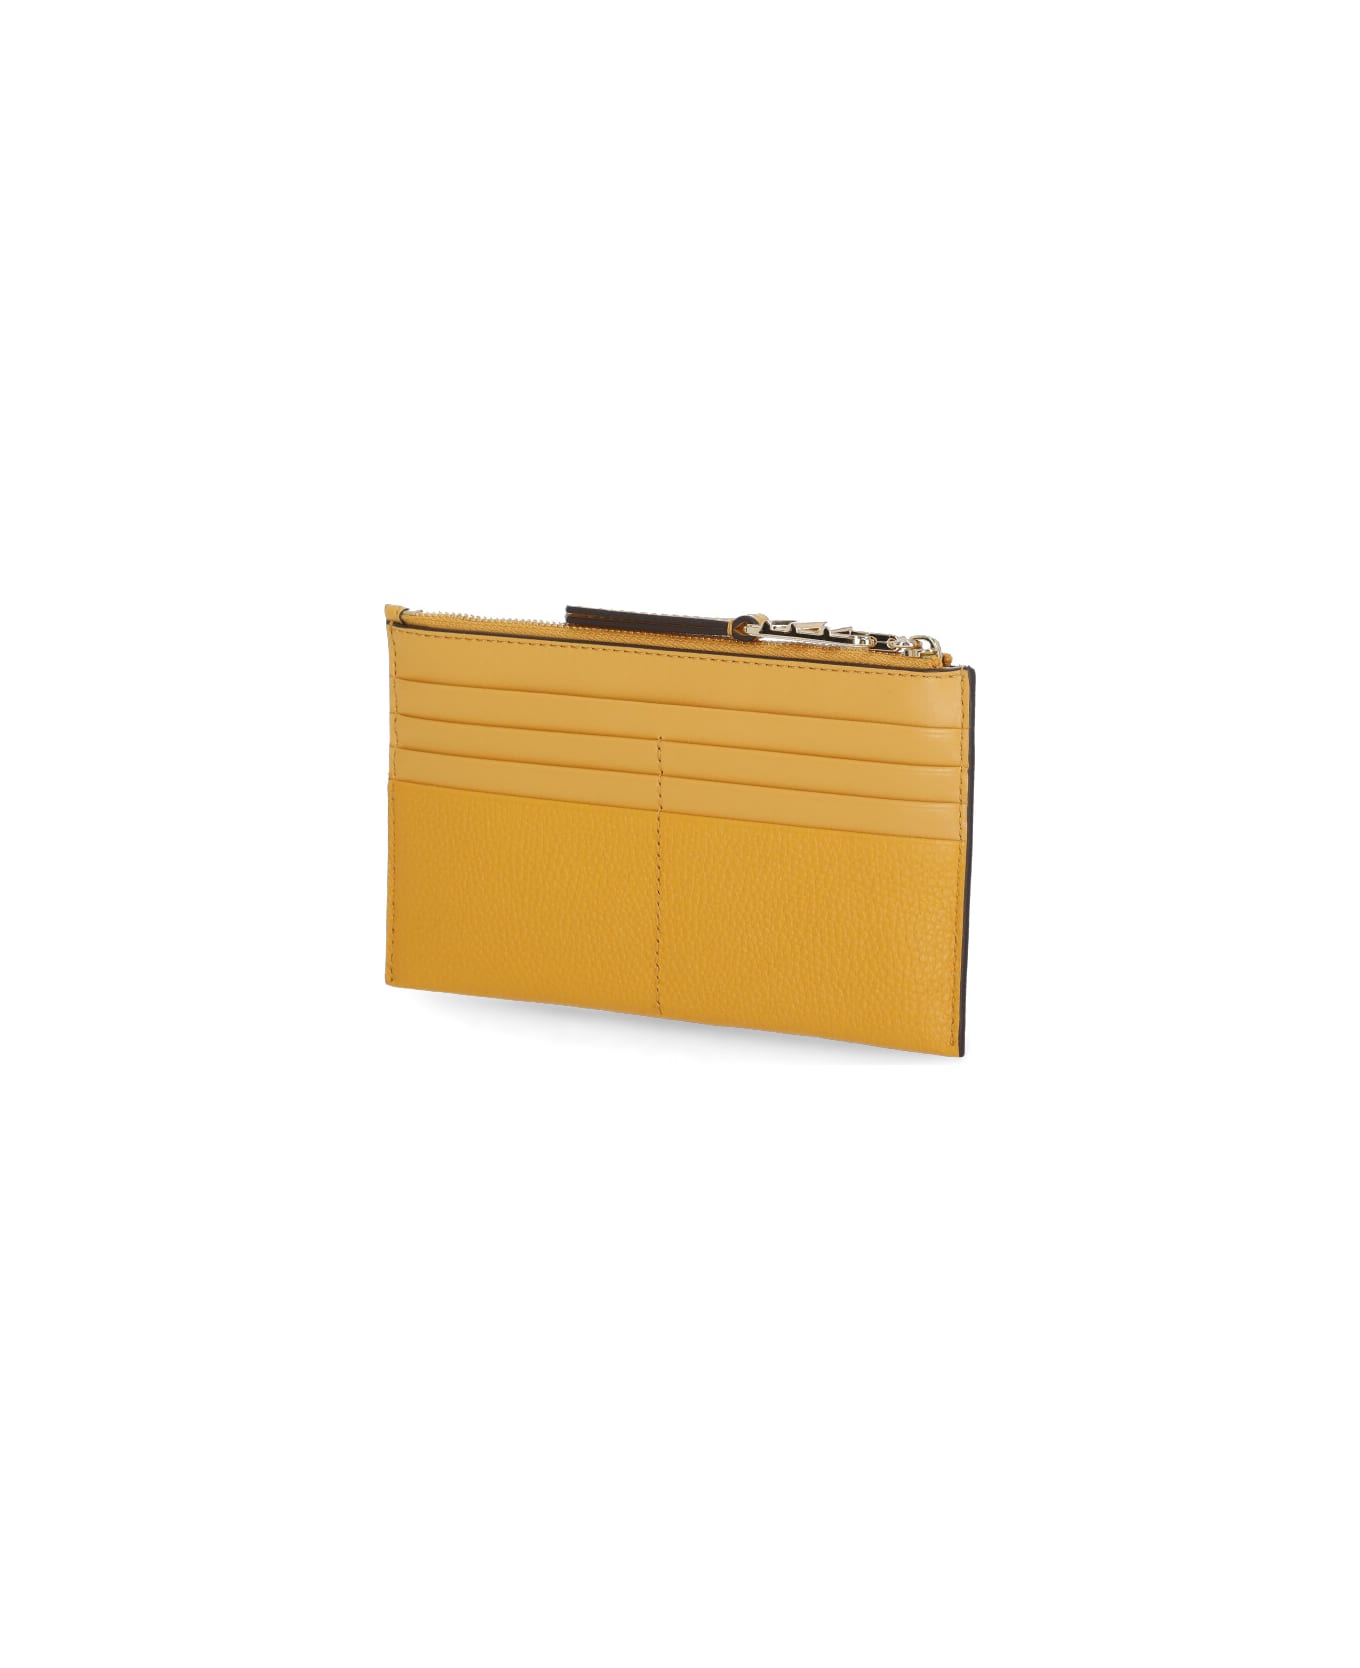 Michael Kors Logo Plaque Zipped Wallet - Yellow